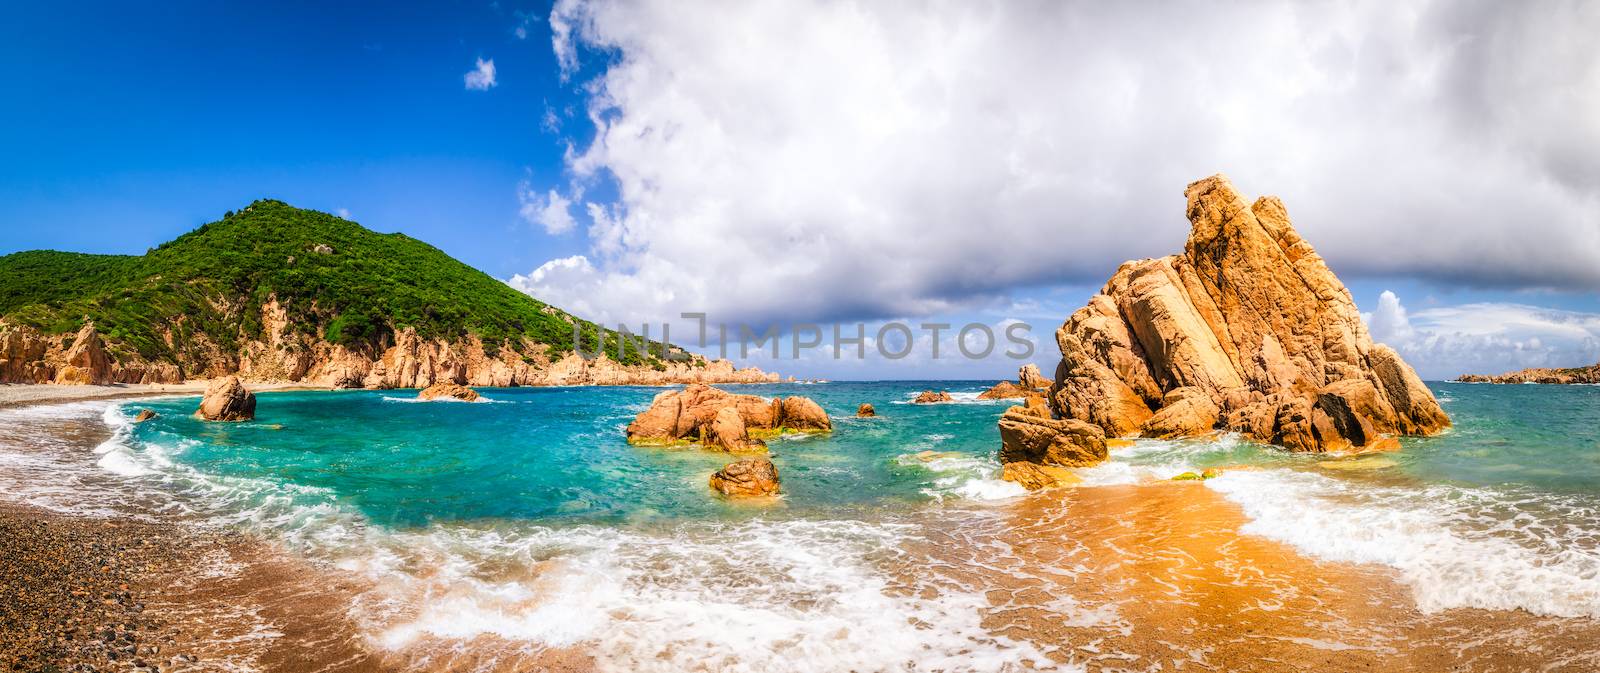 Beach scenic panoramic view in Costa Paradiso, Sardinia by martinm303